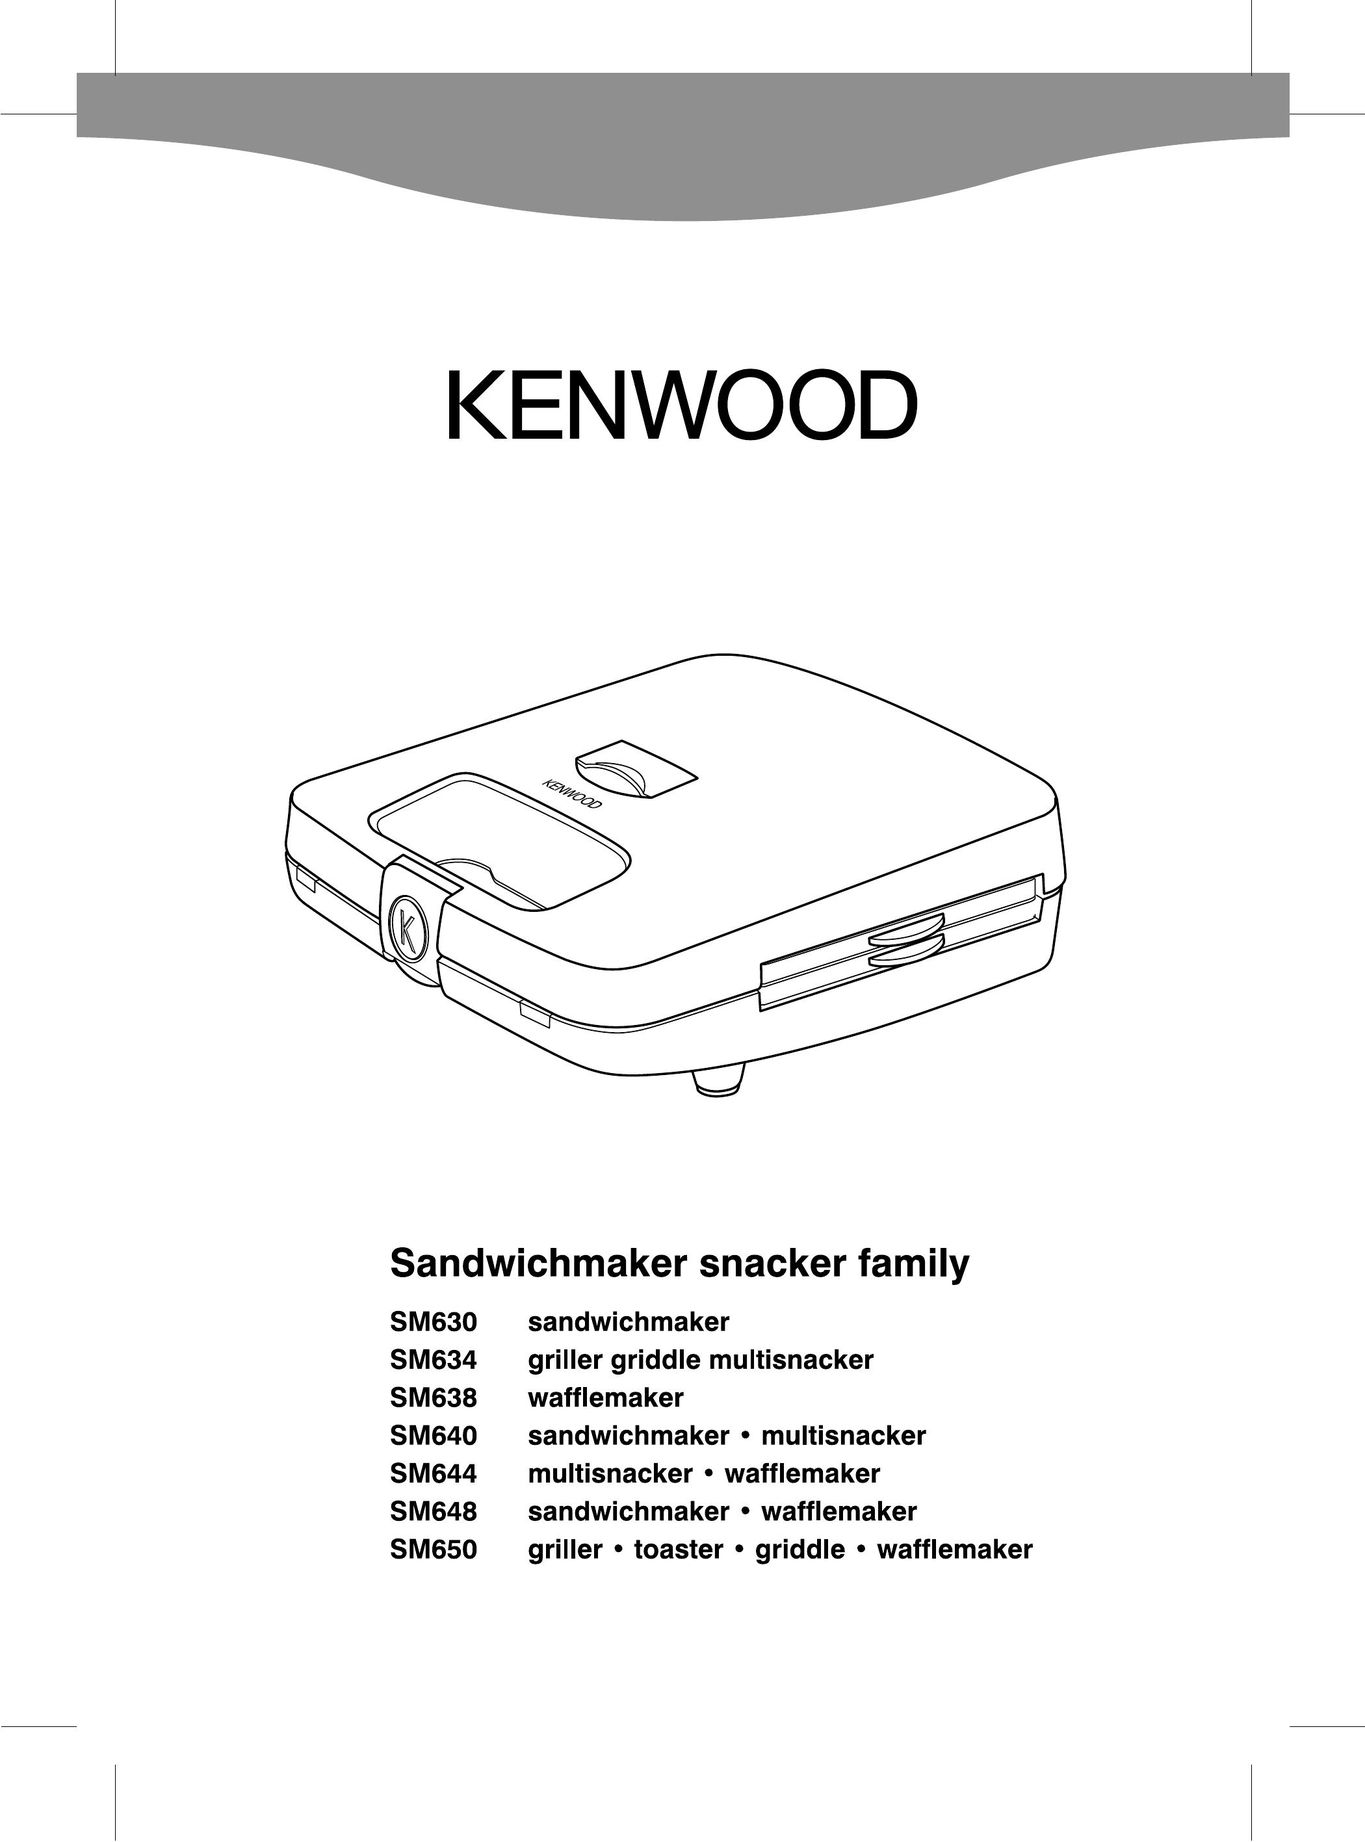 Kenwood SM644 Kitchen Grill User Manual